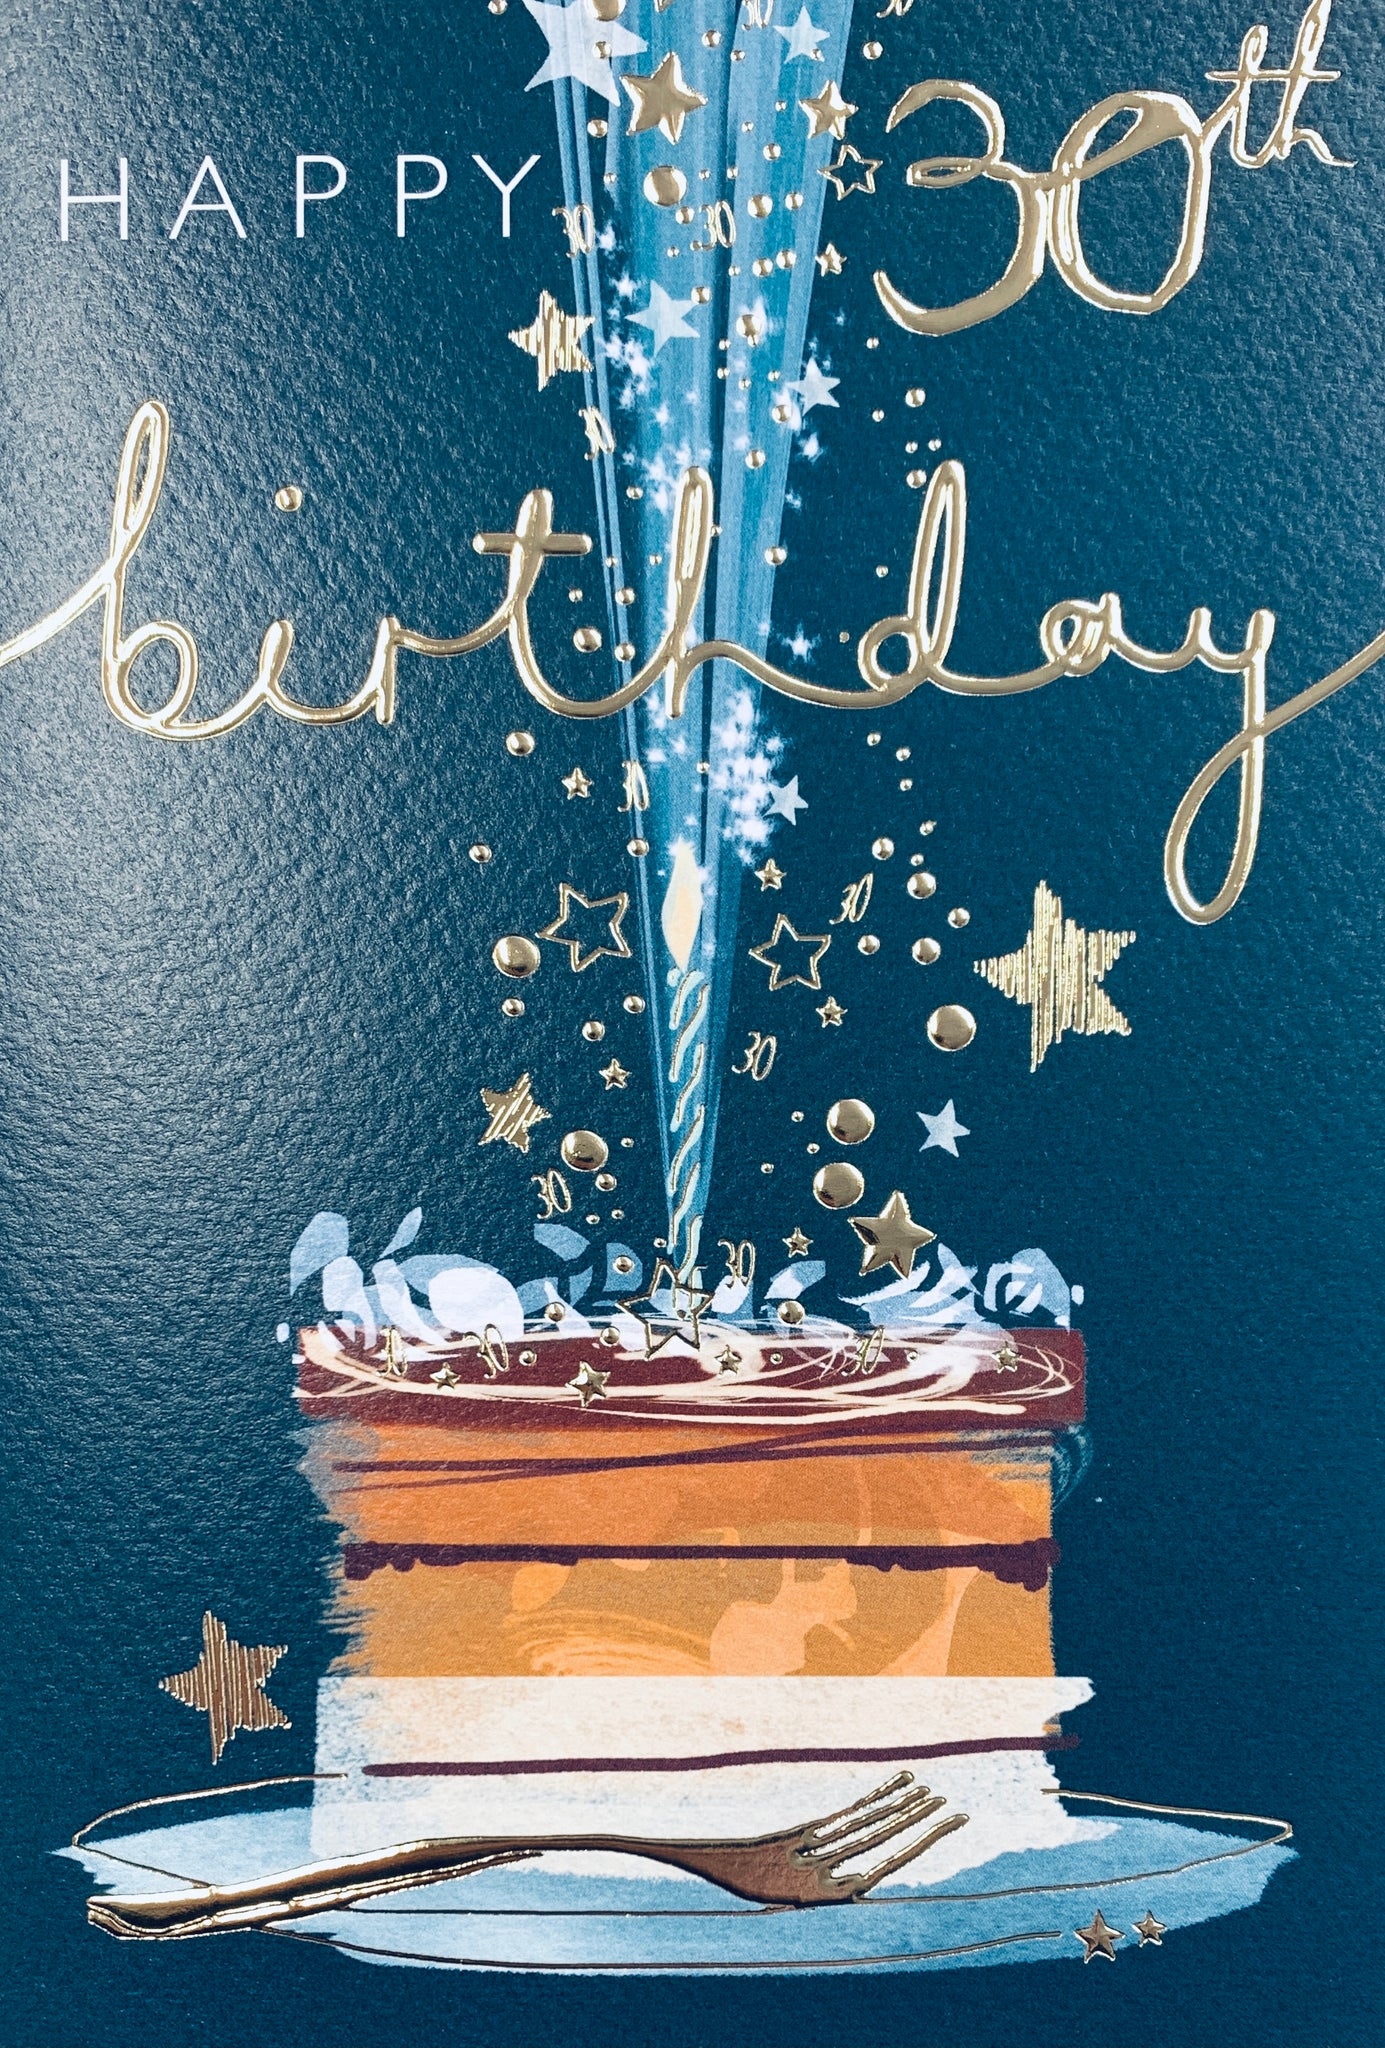 Age 30 birthday card - birthday cake